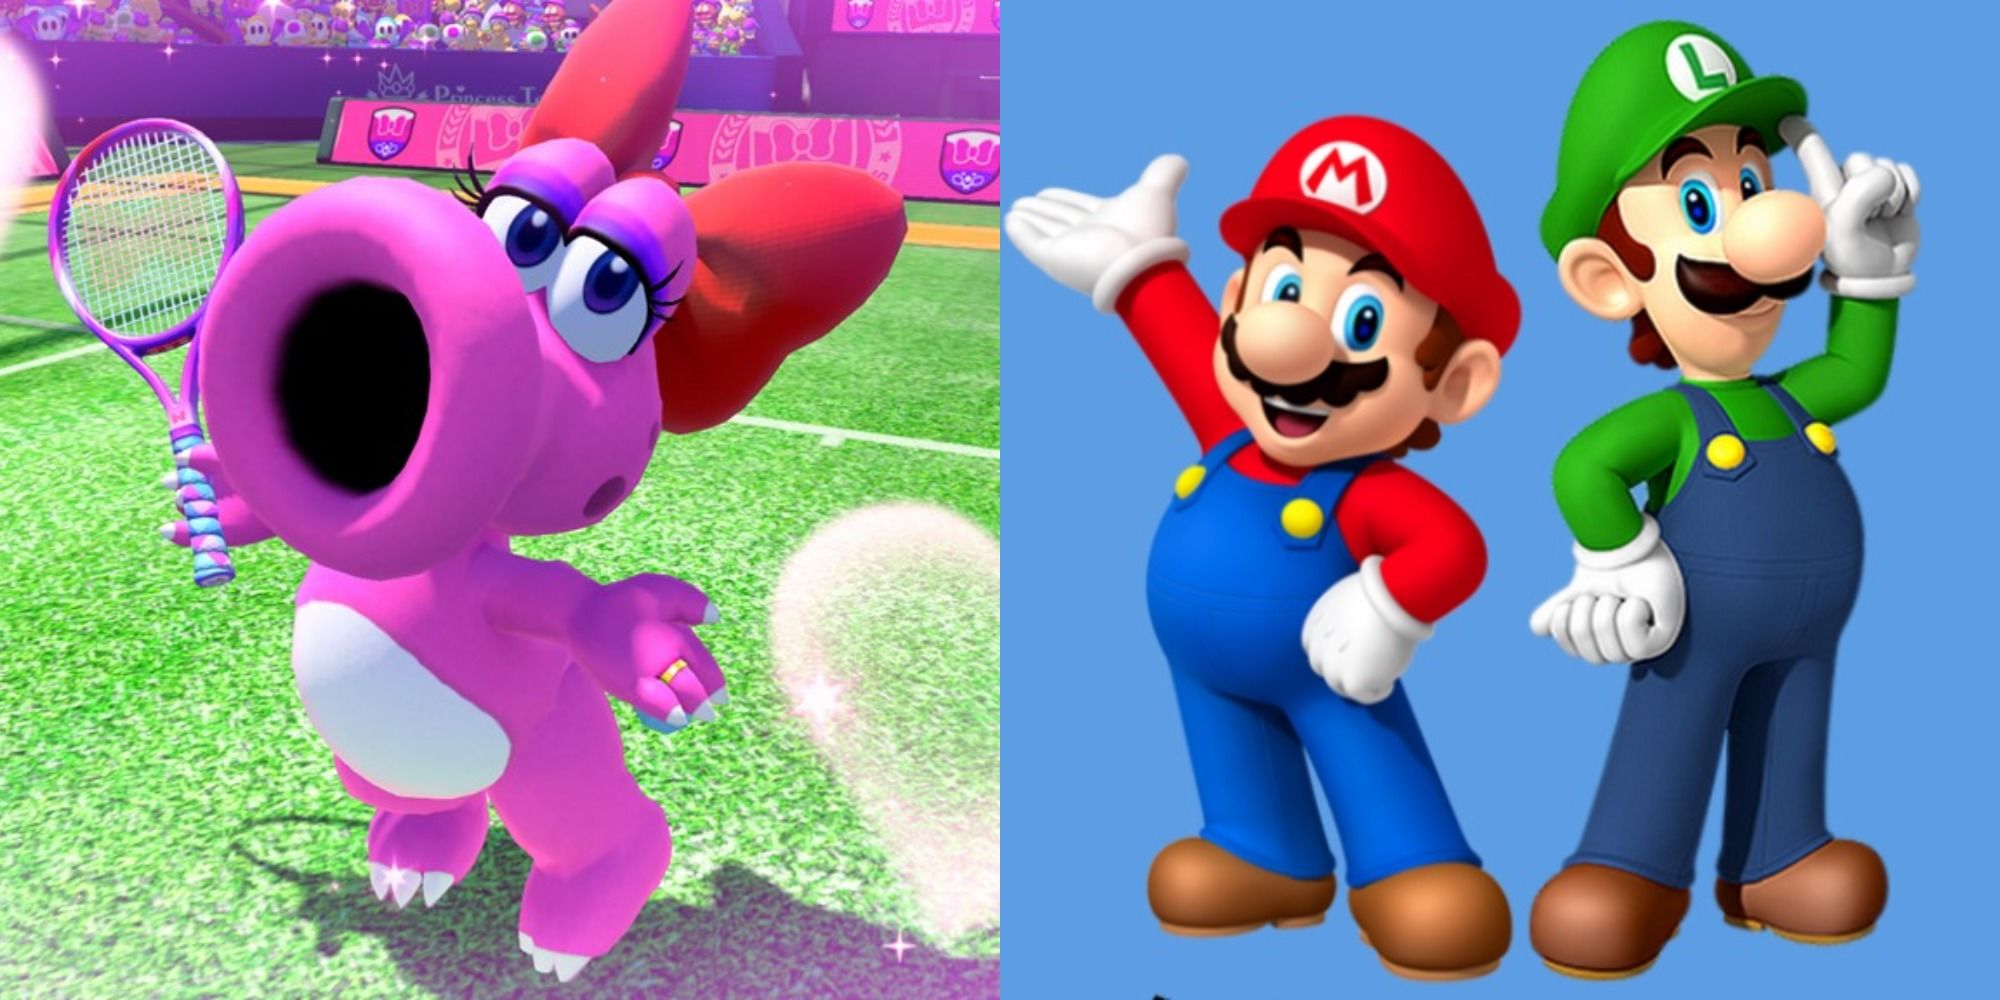 Split image showing Birdo and Mario and Luigi from the Mario franchise